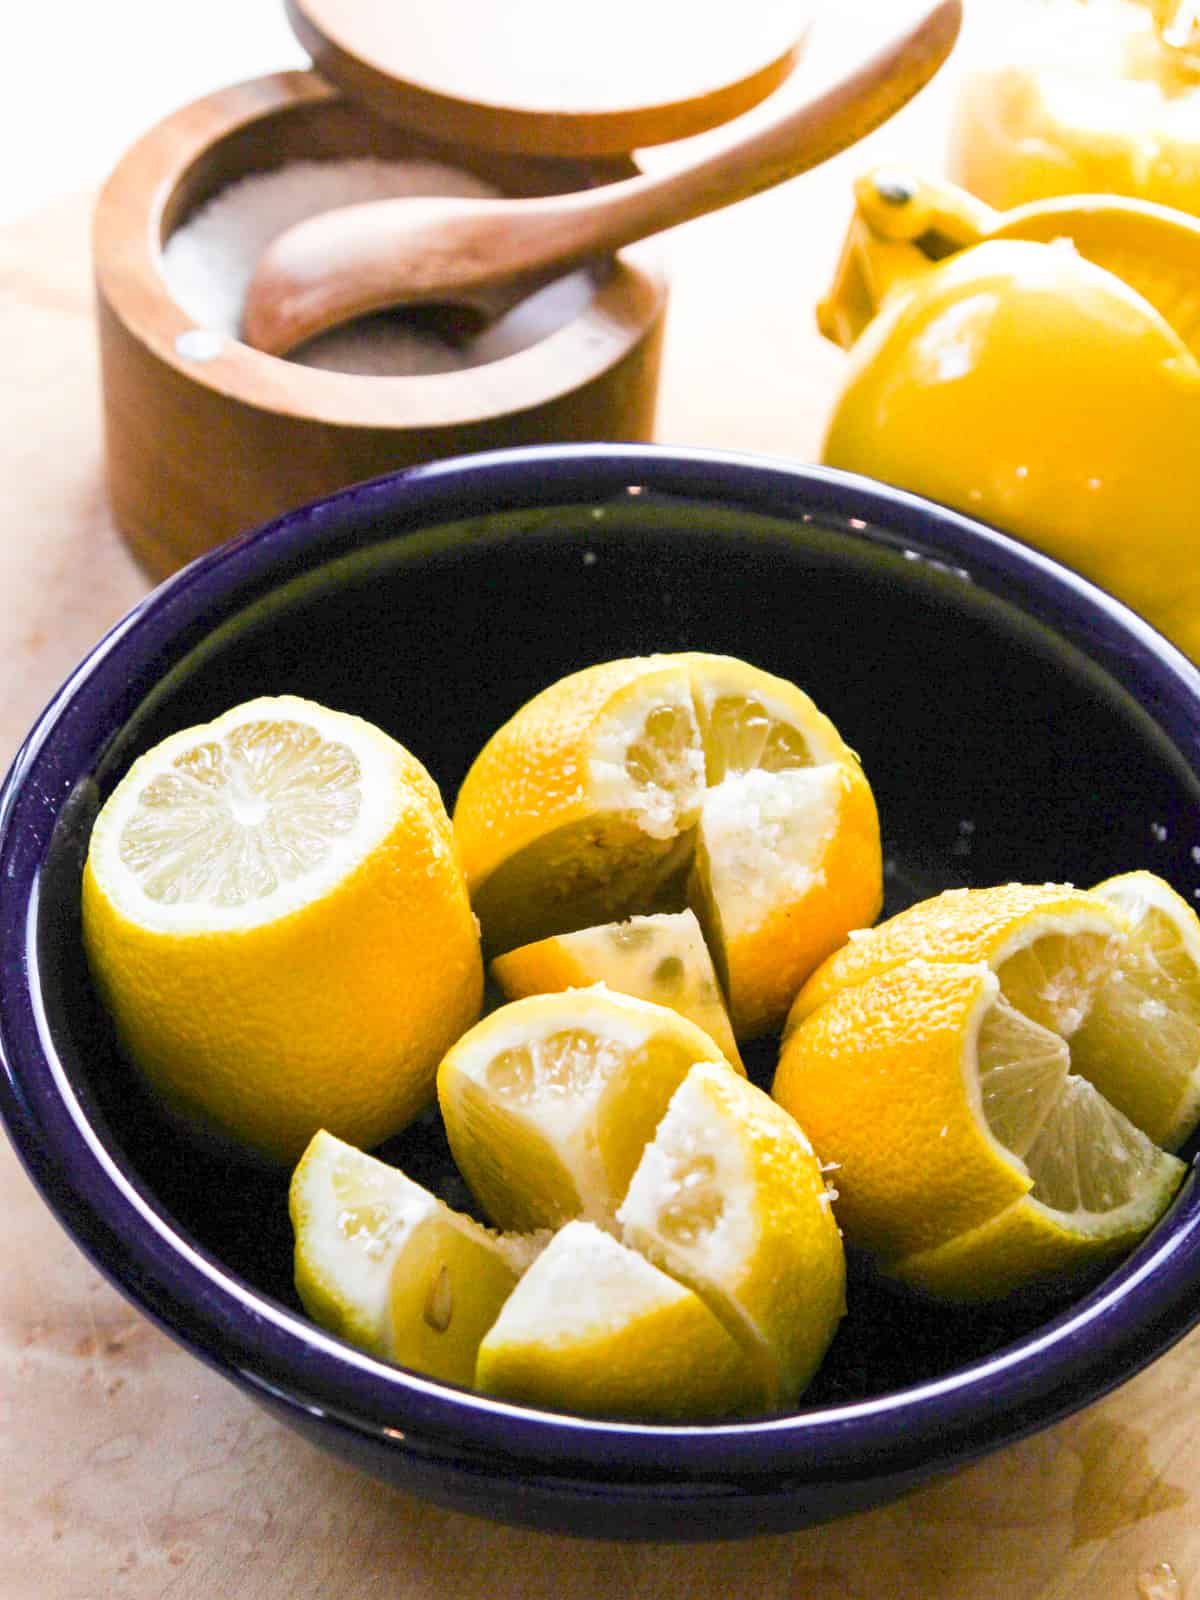 Cut lemons in a blue bowl sliced and salted to make preserved lemons. 